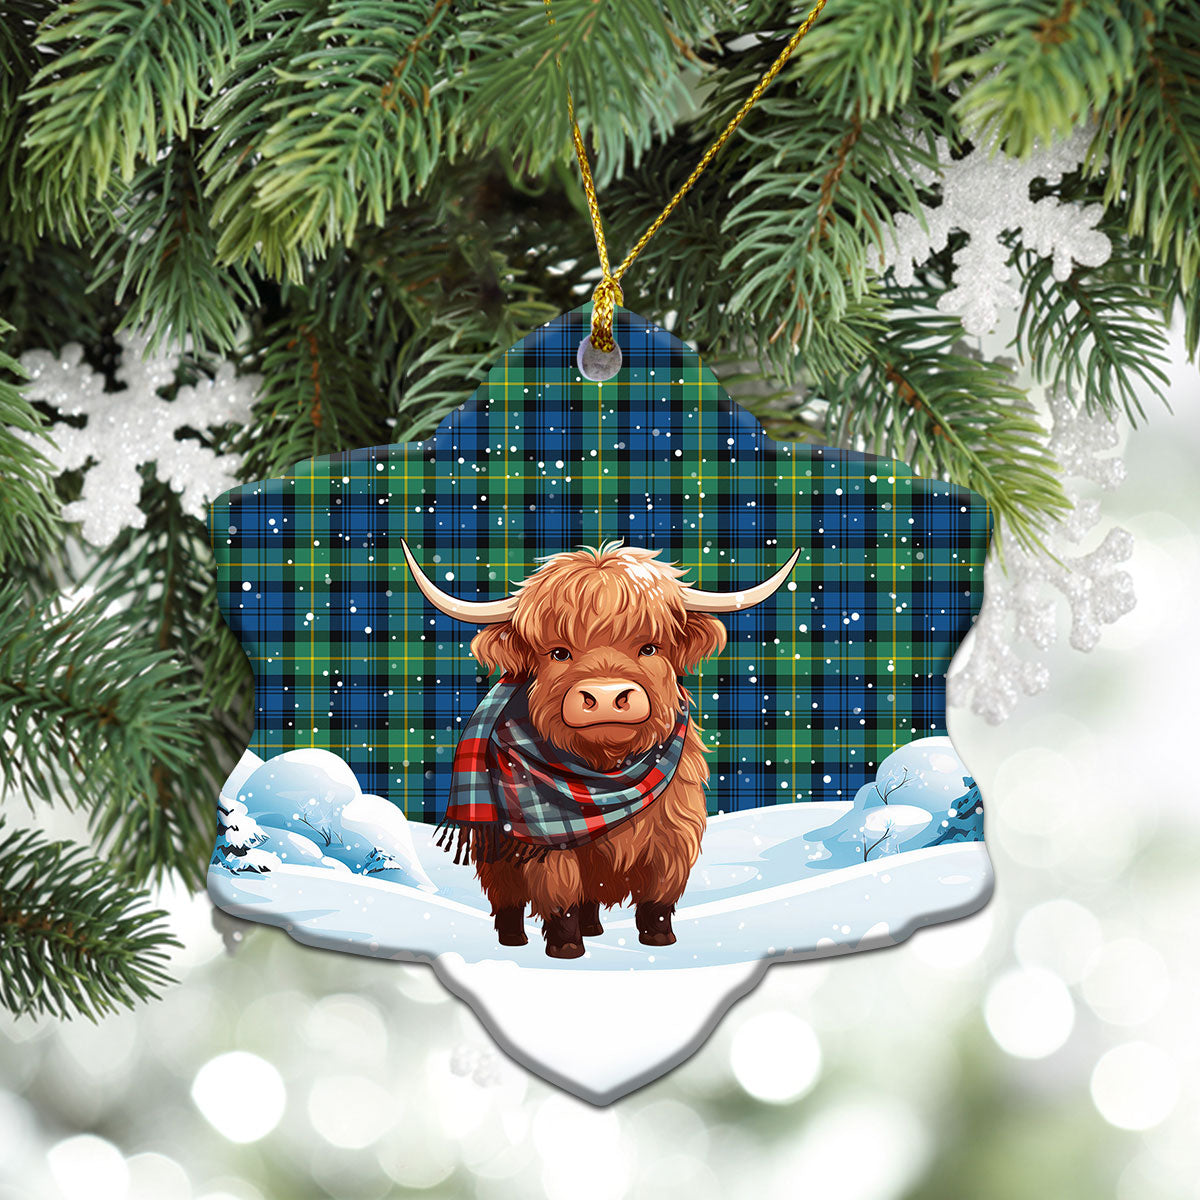 Gordon Ancient Tartan Christmas Ceramic Ornament - Highland Cows Snow Style